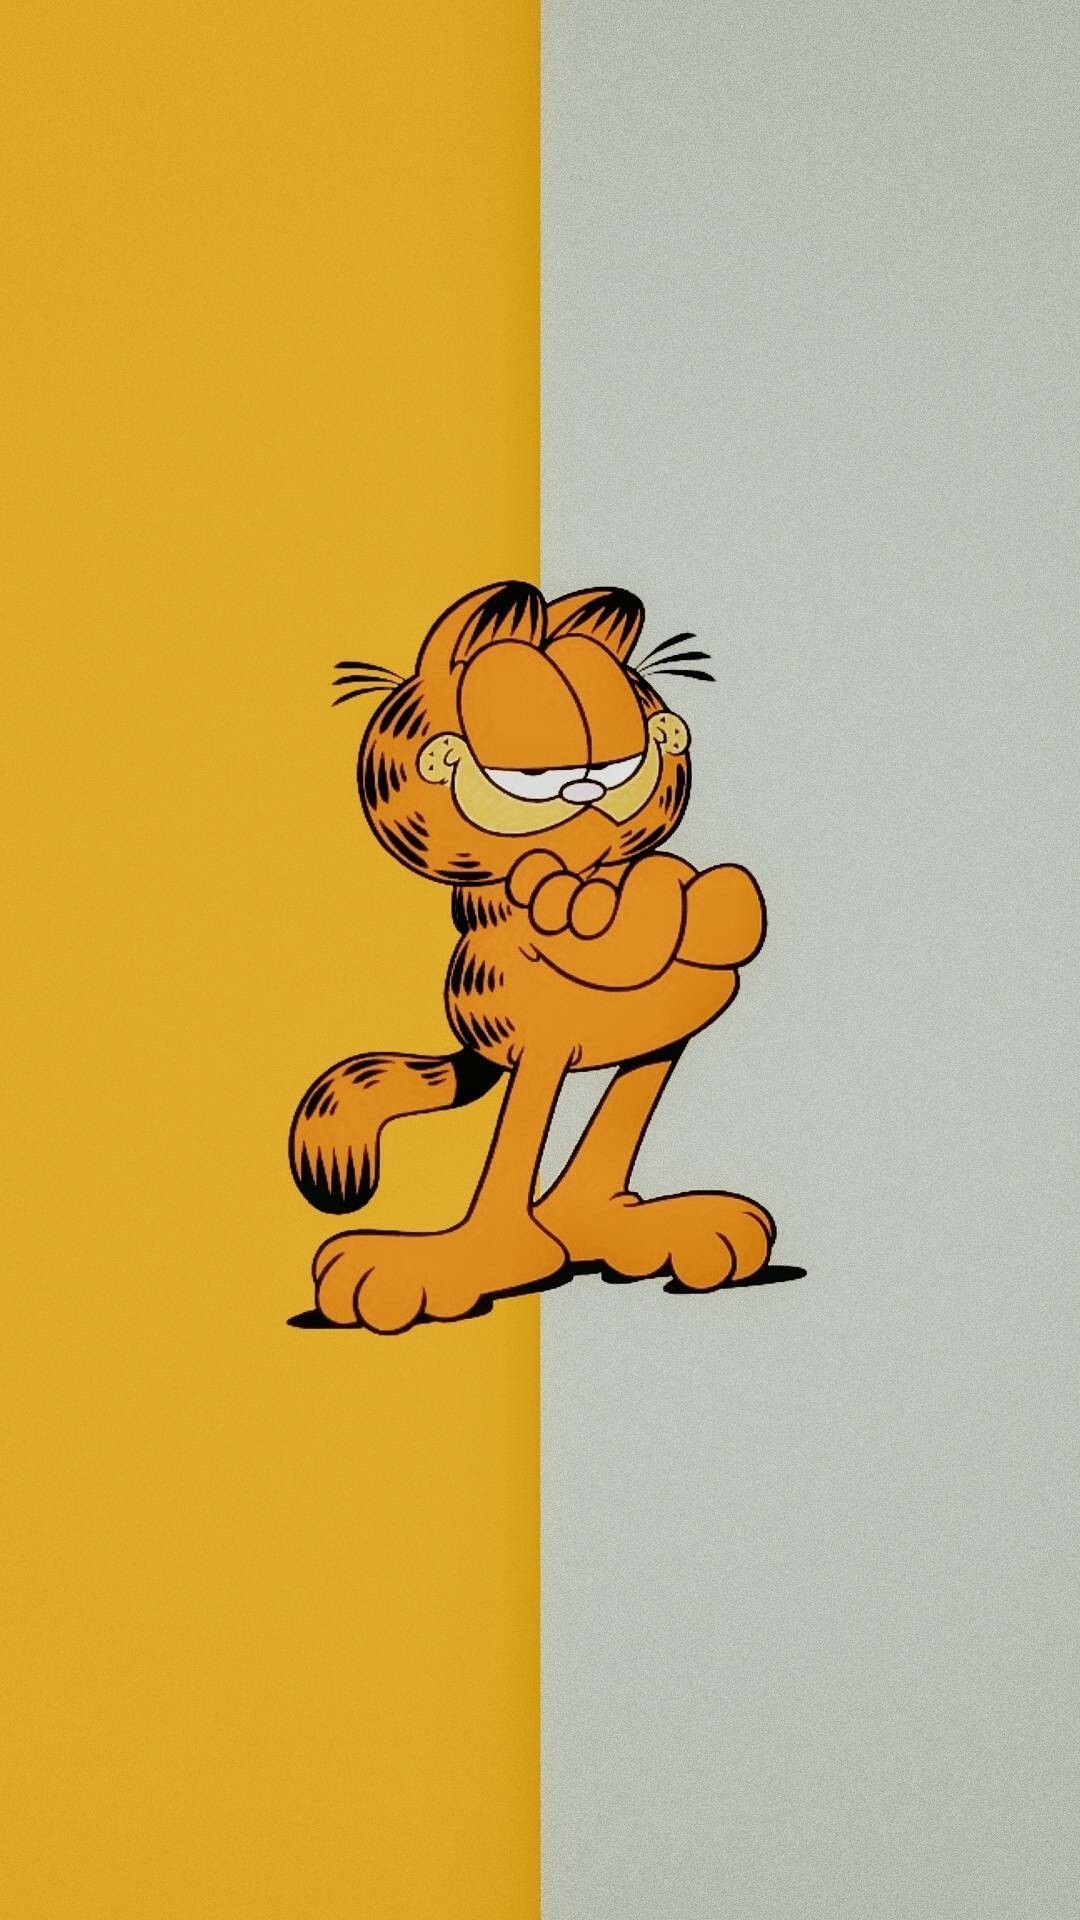 Garfield: Jim Davis's iconic Monday hating, lasagna loving comic cat. 1080x1920 Full HD Background.